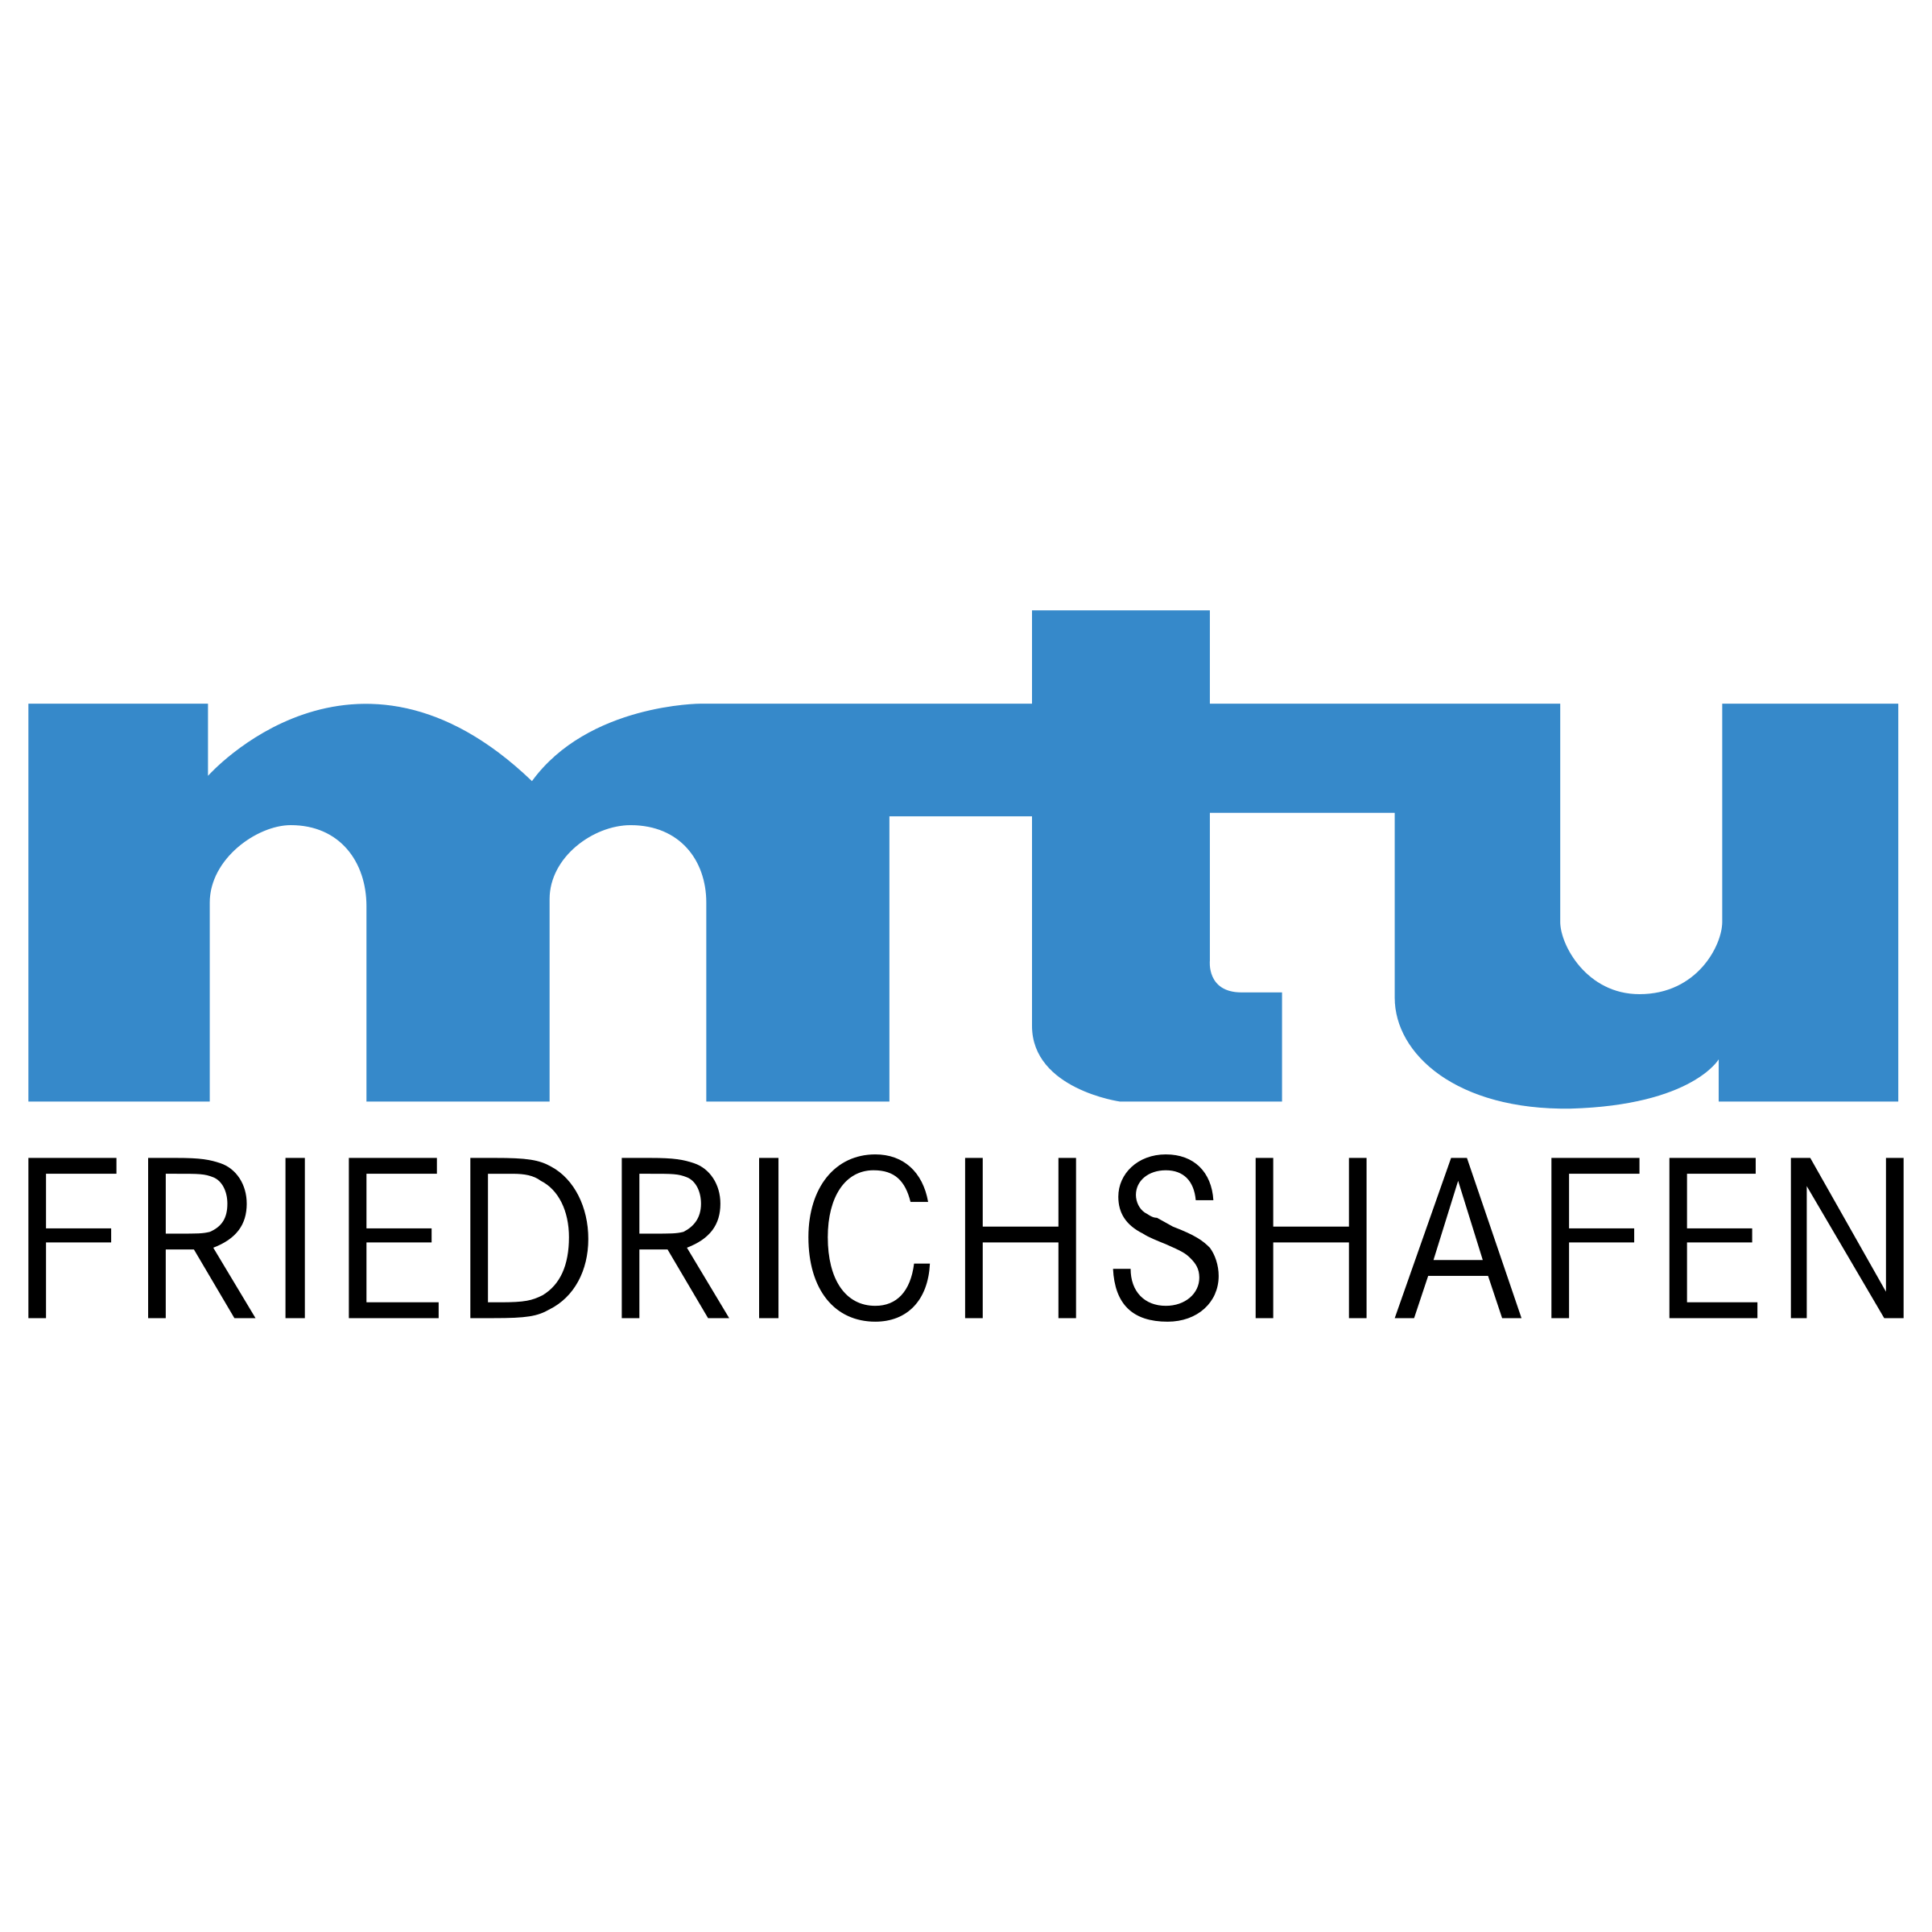 MTU Logo - MTU Friedrichshafen Logo PNG Transparent & SVG Vector - Freebie Supply